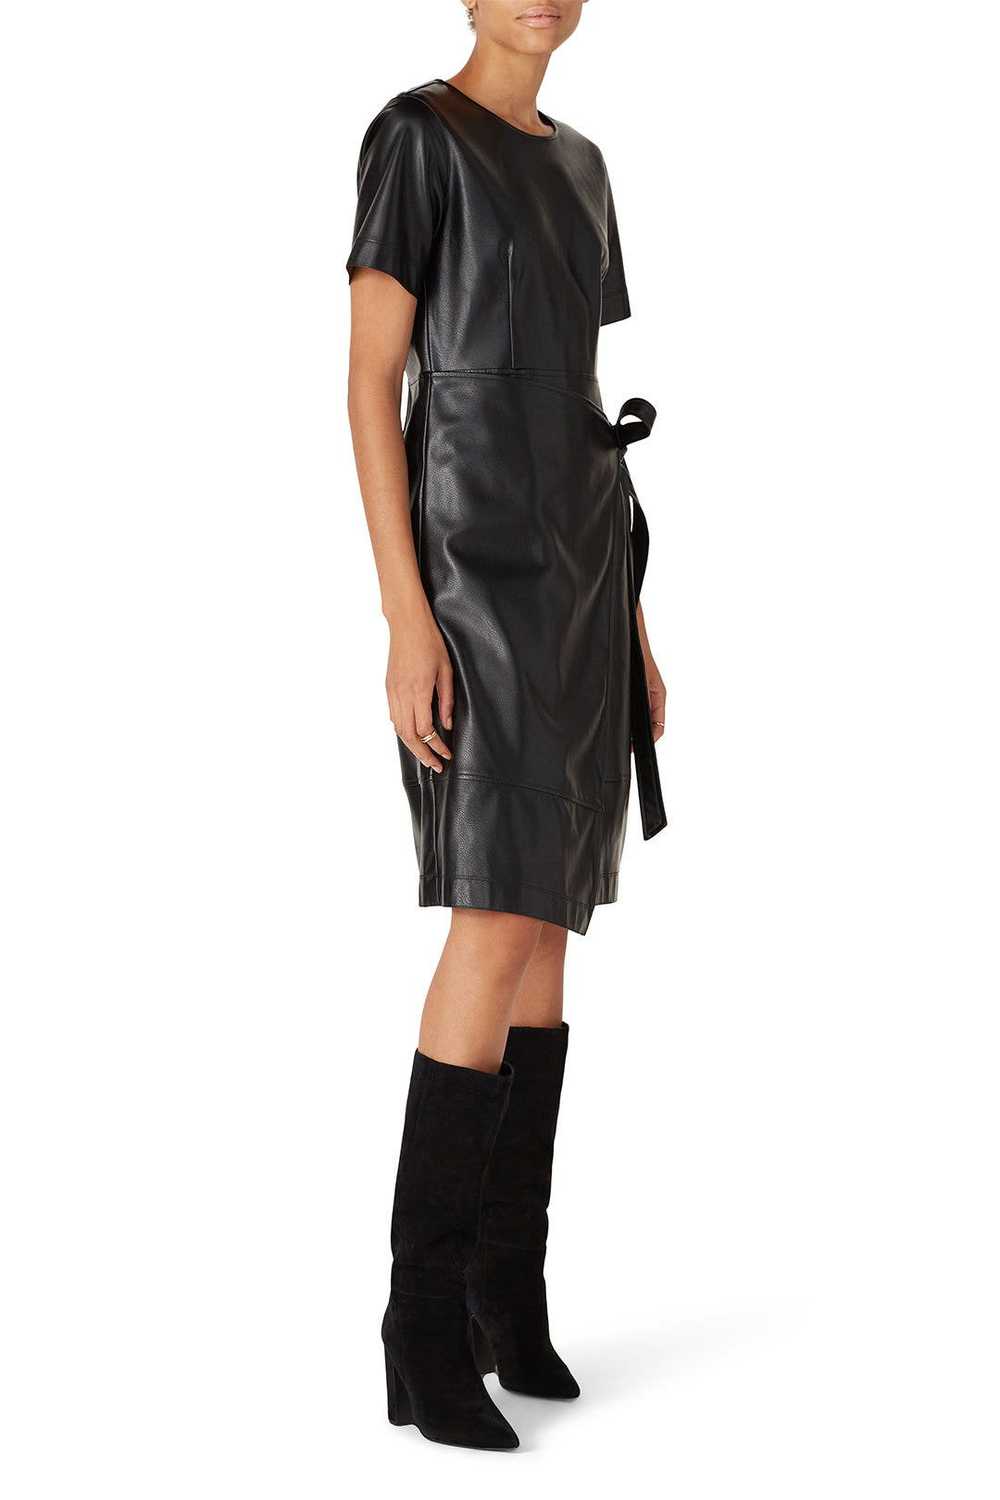 Natori Black Faux Leather Wrap Dress - image 2